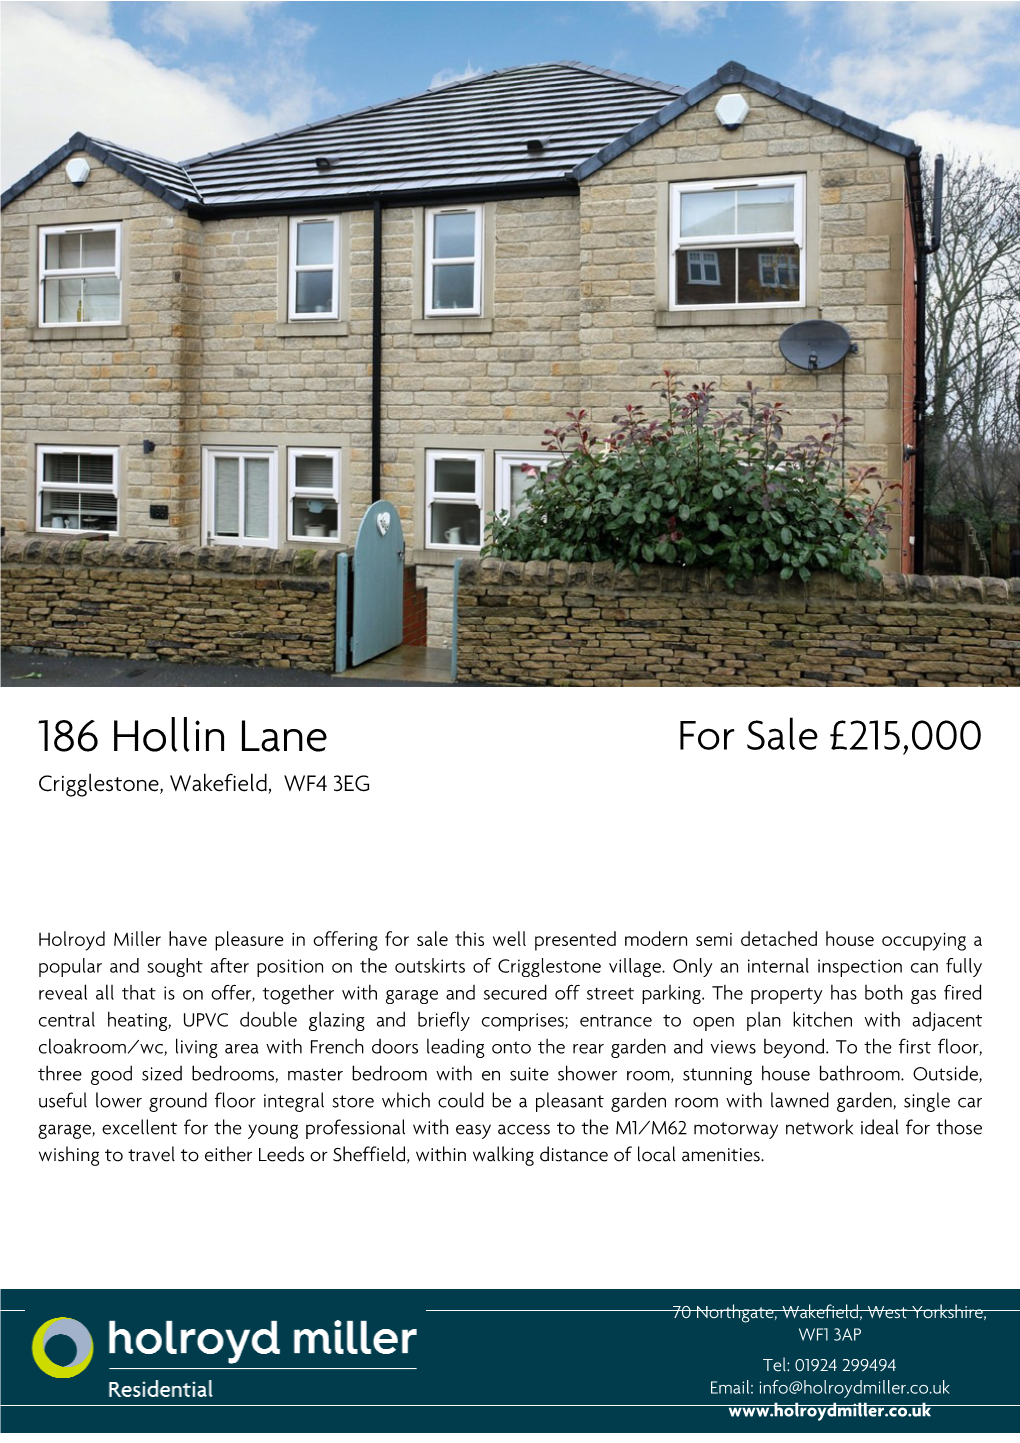 186 Hollin Lane for Sale £215,000 Crigglestone, Wakefield, WF4 3EG